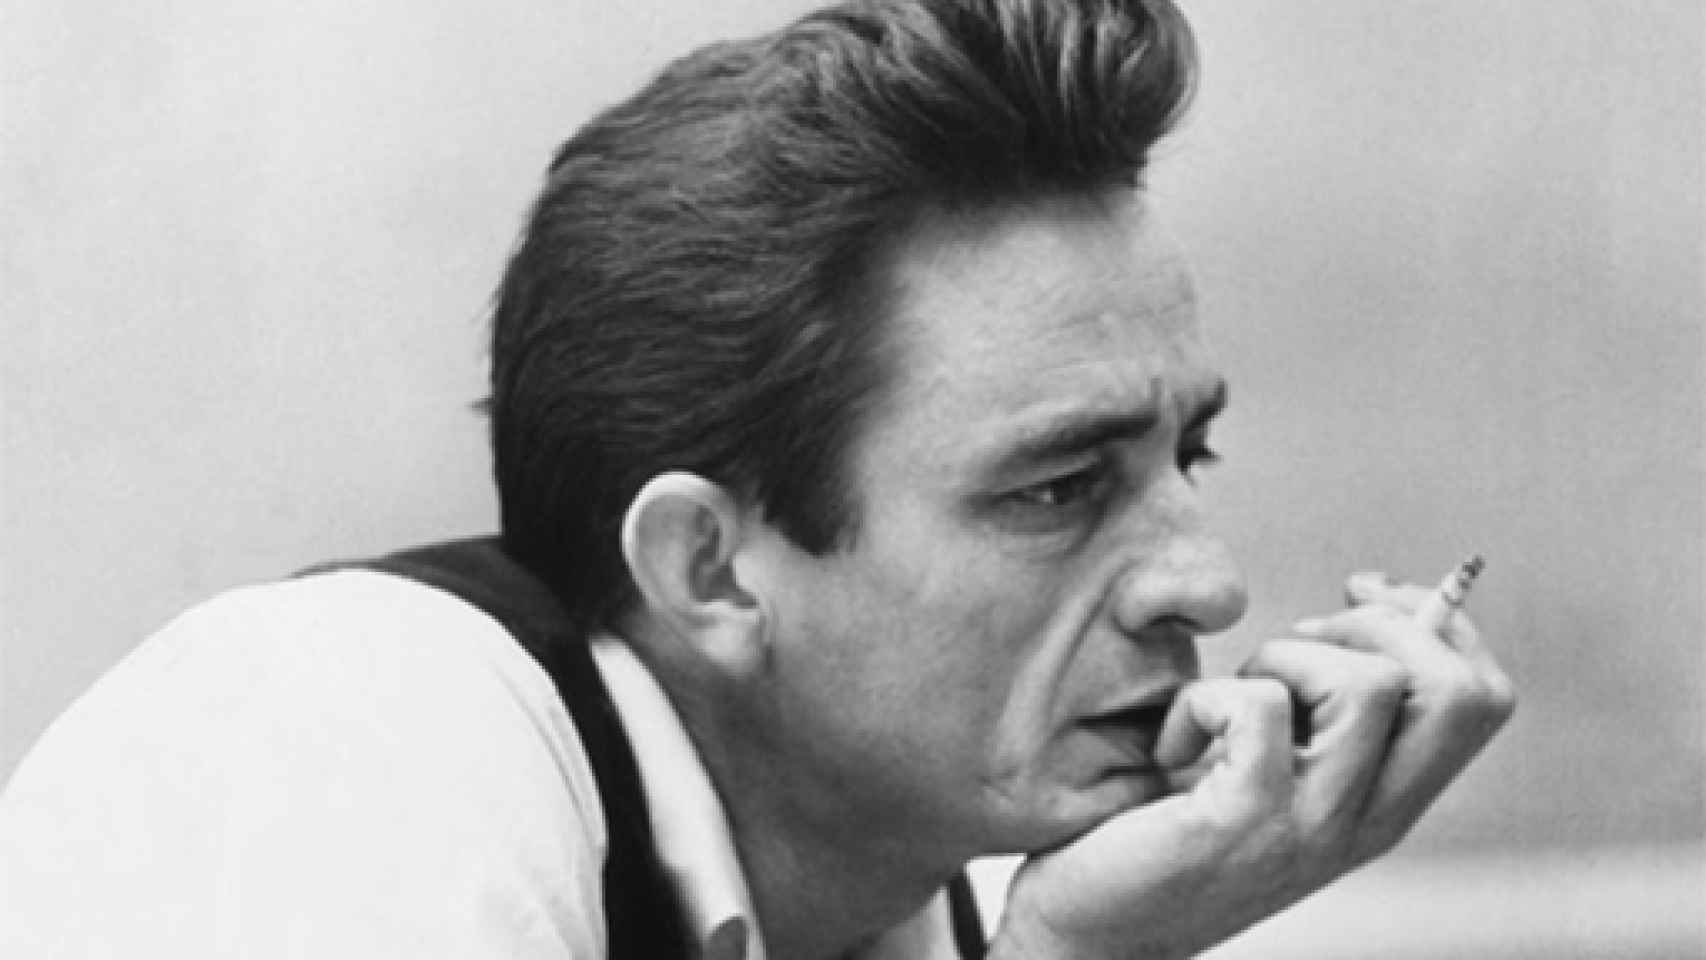 Image: Johnny Cash, negro sobre blanco